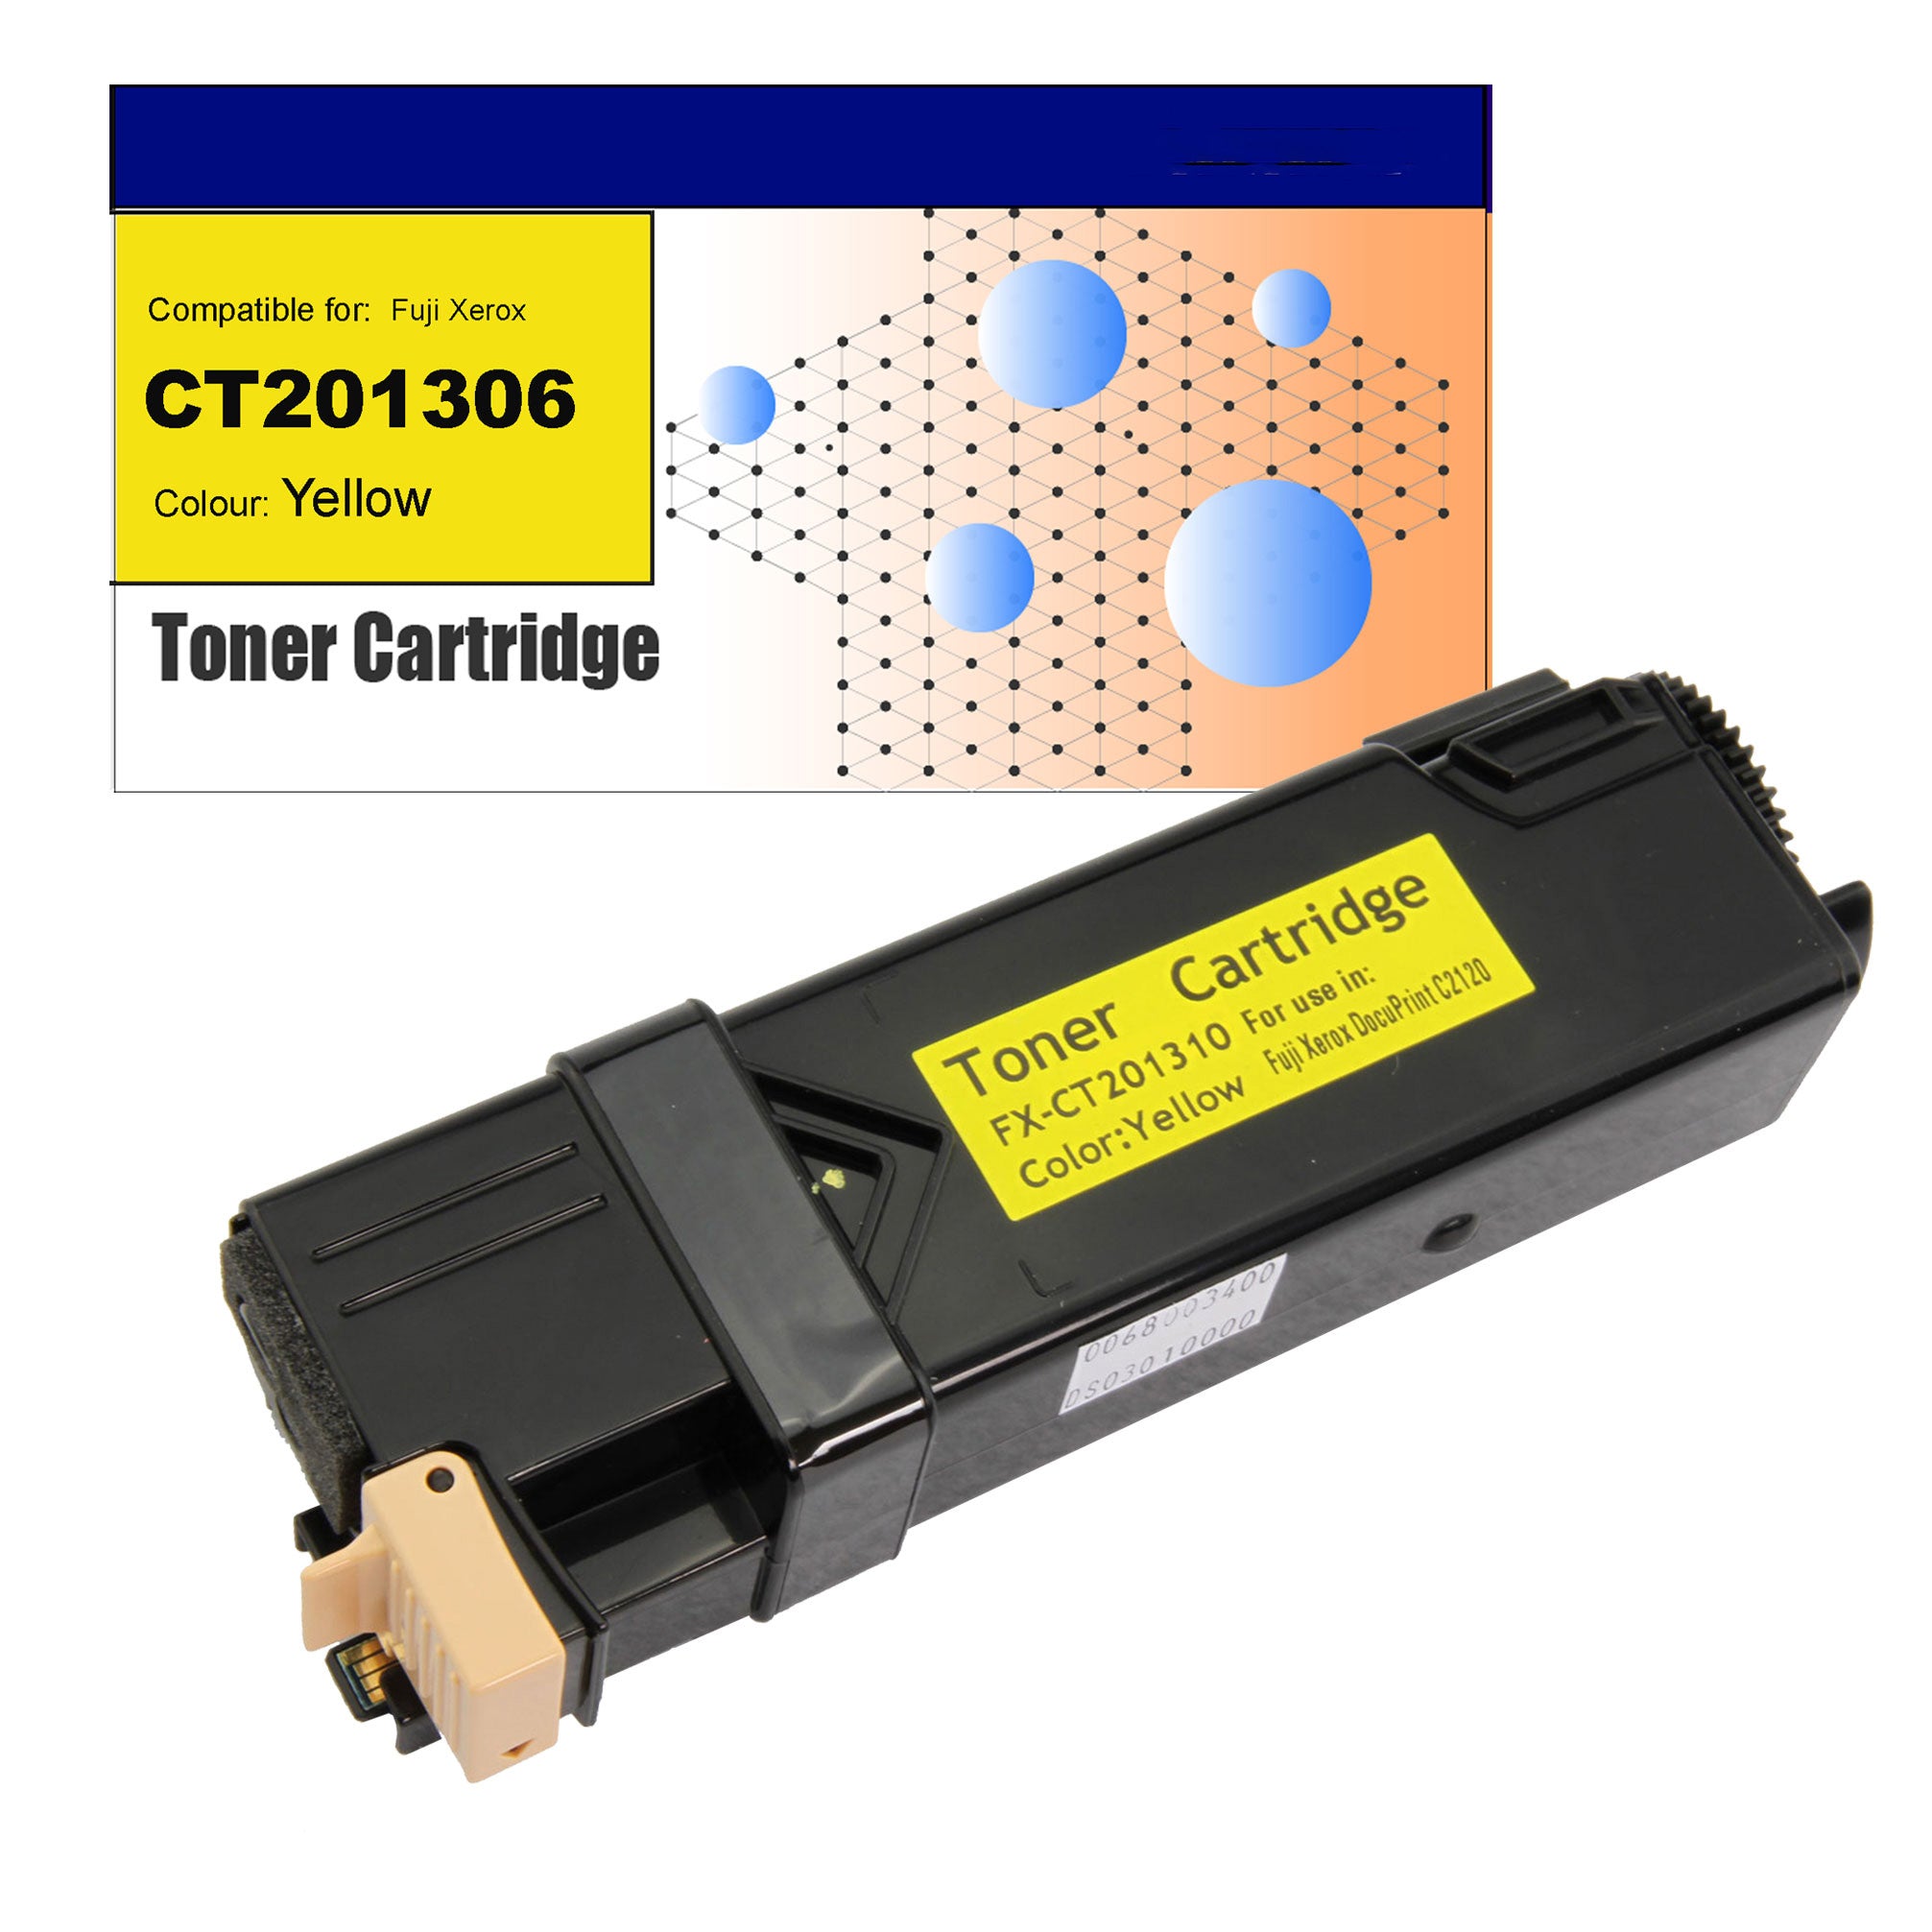 Compatible Toner for Fuji Xerox CT201306 (C2120) Yellow Toner Cartridges